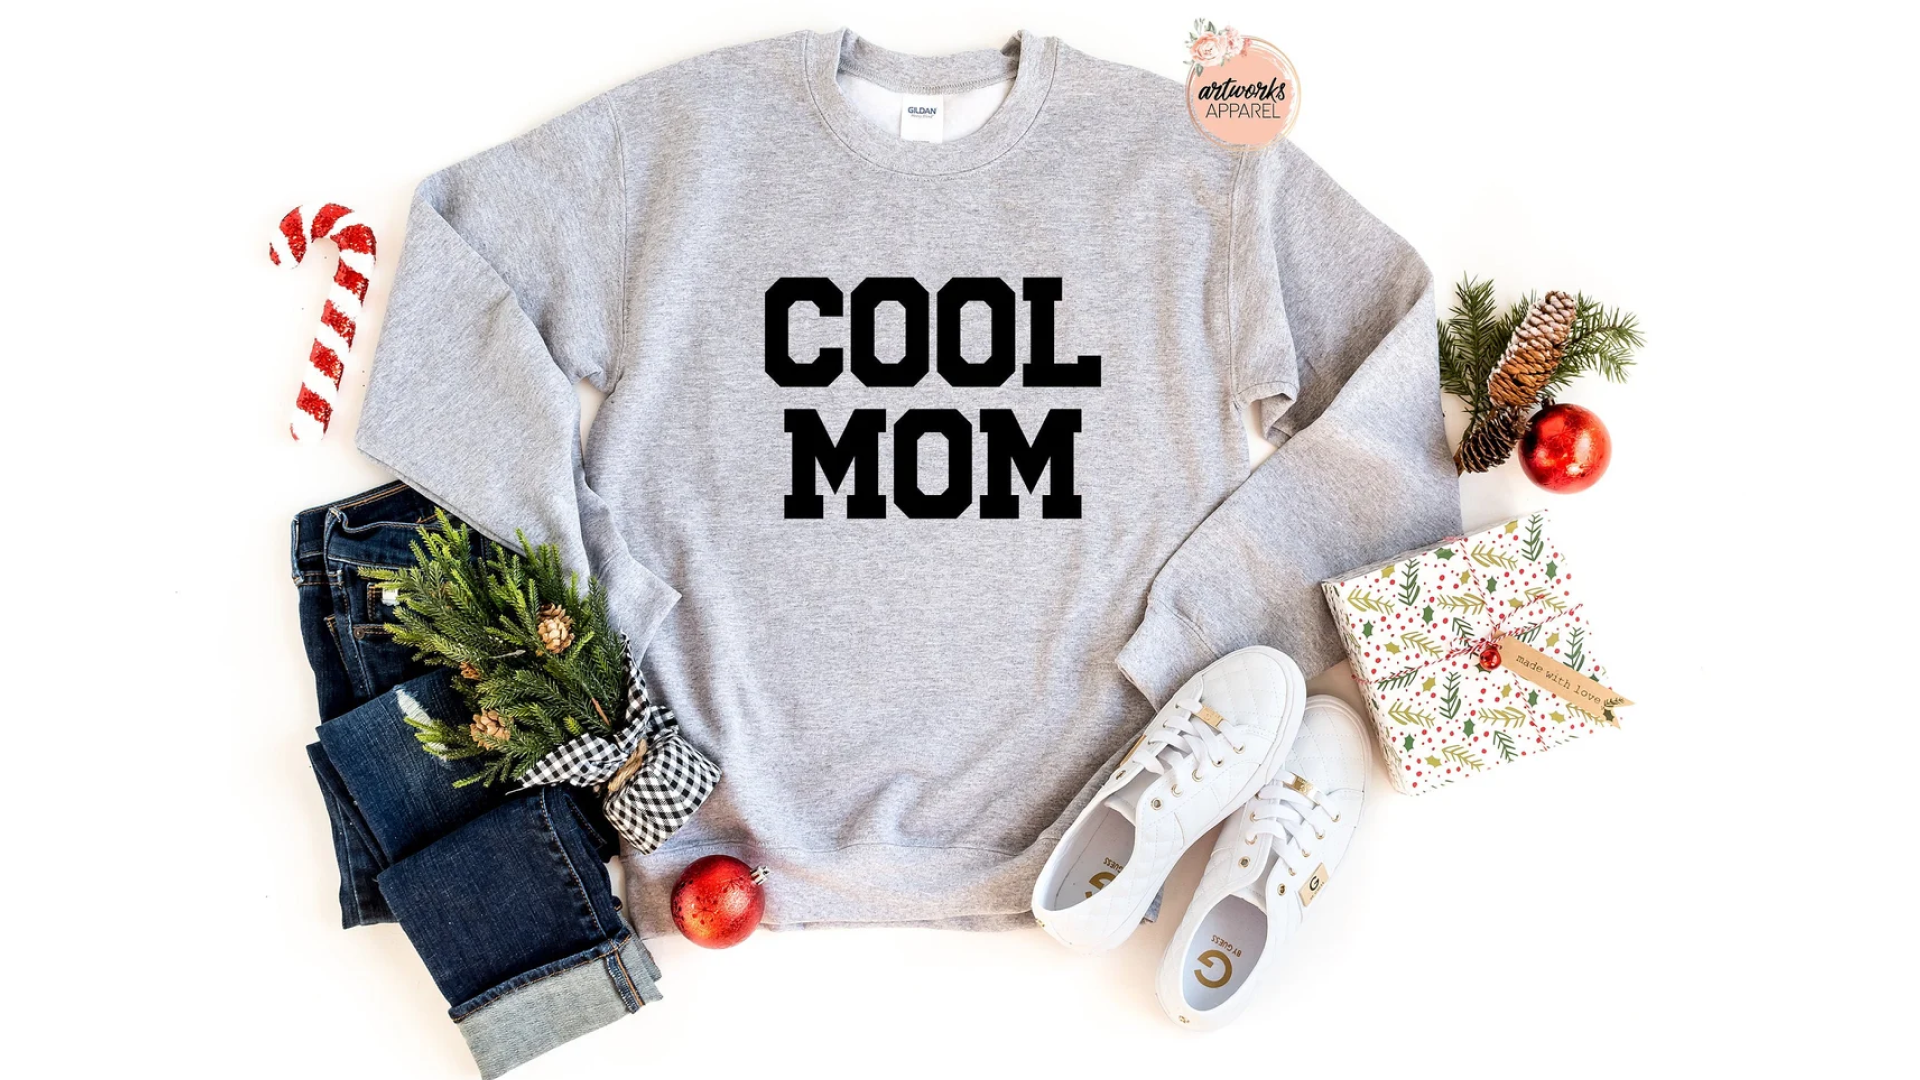 Cool mom sweatshirt